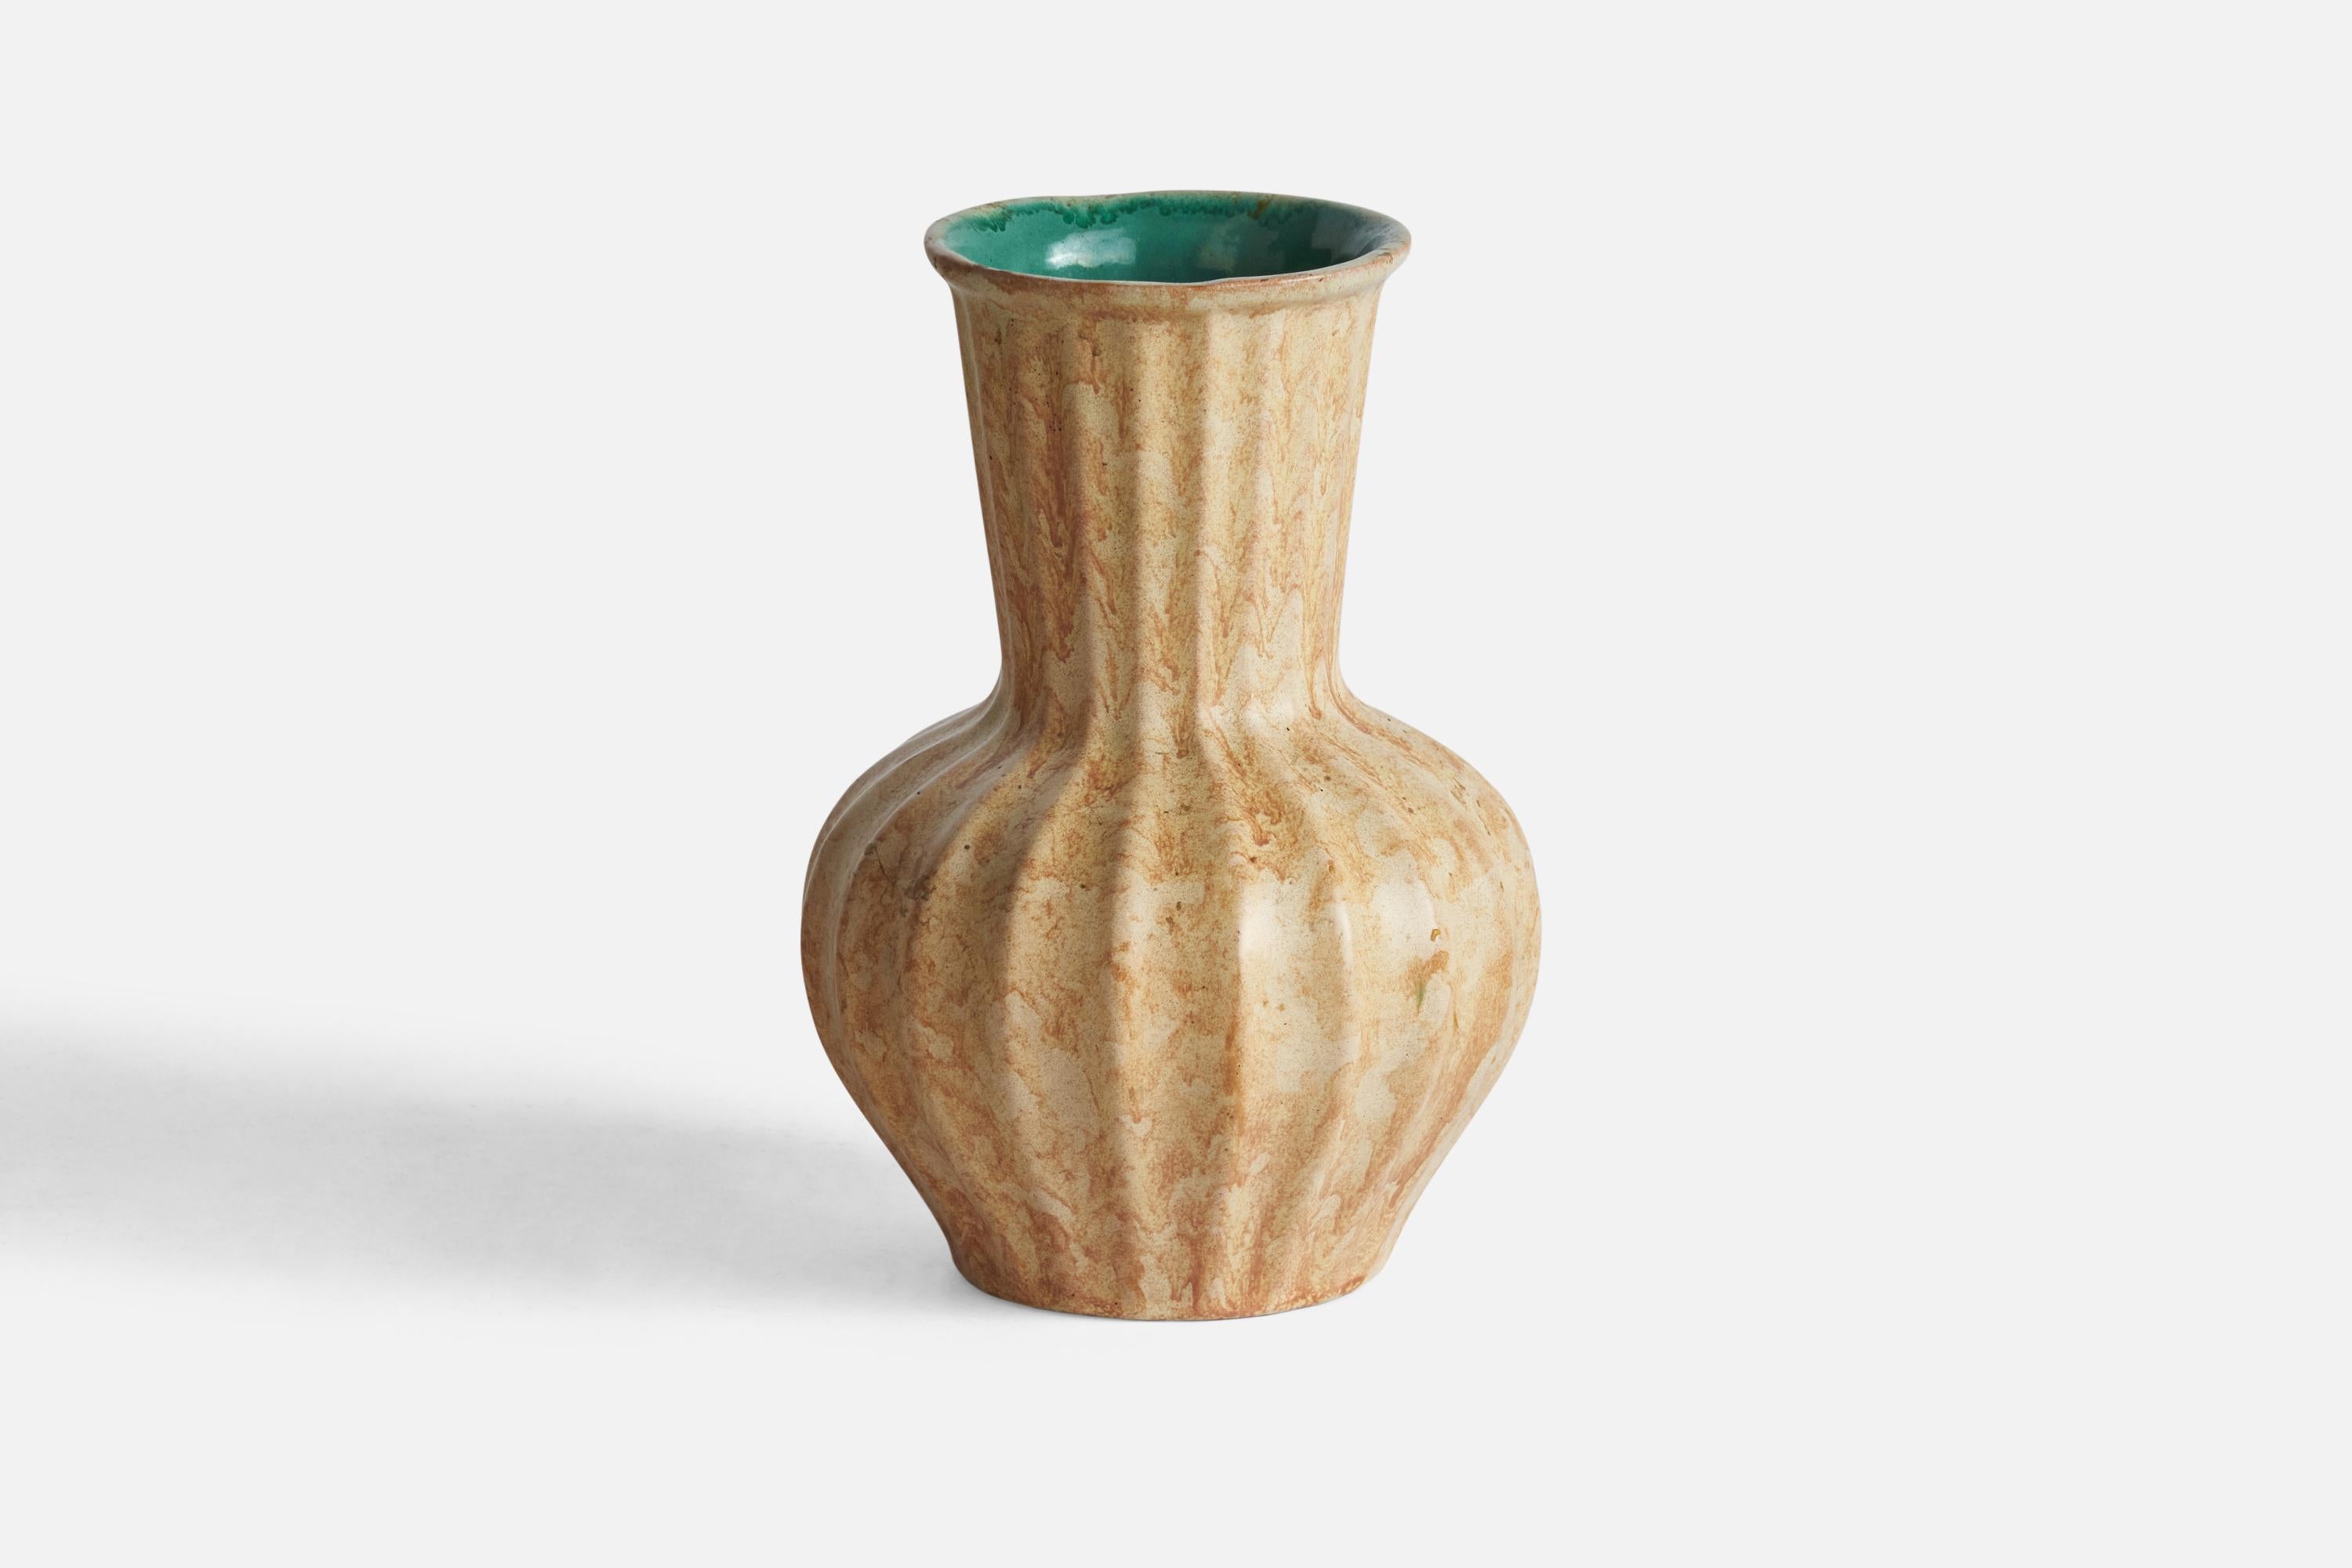 A fluted beige and green-glazed earthenware vase designed and produced by Upsala Ekeby, Sweden, 1930s.